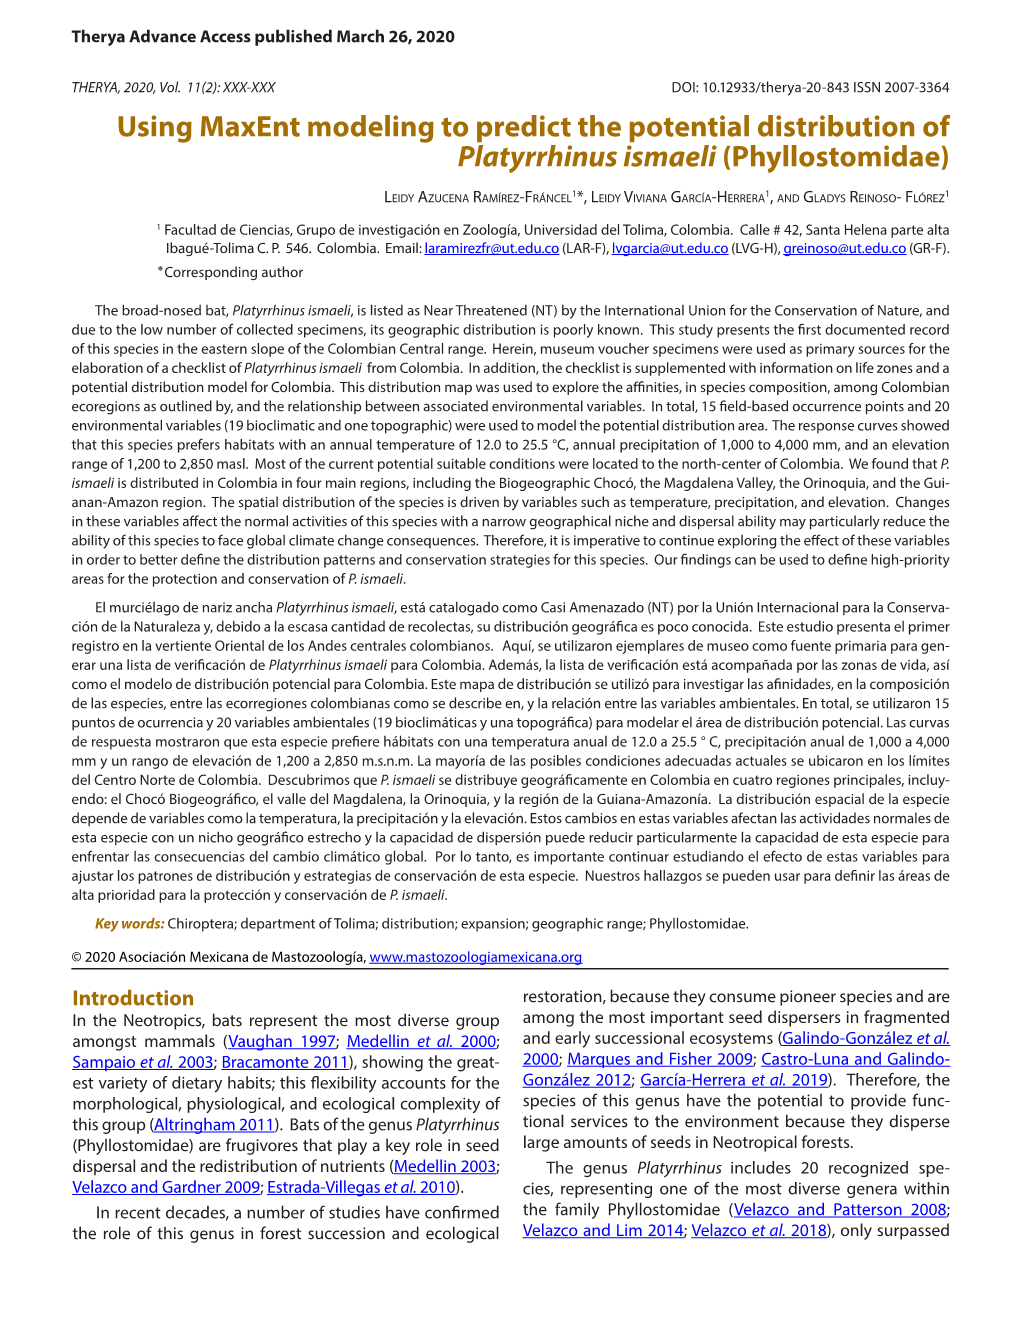 Using Maxent Modeling to Predict the Potential Distribution of Platyrrhinus Ismaeli (Phyllostomidae)